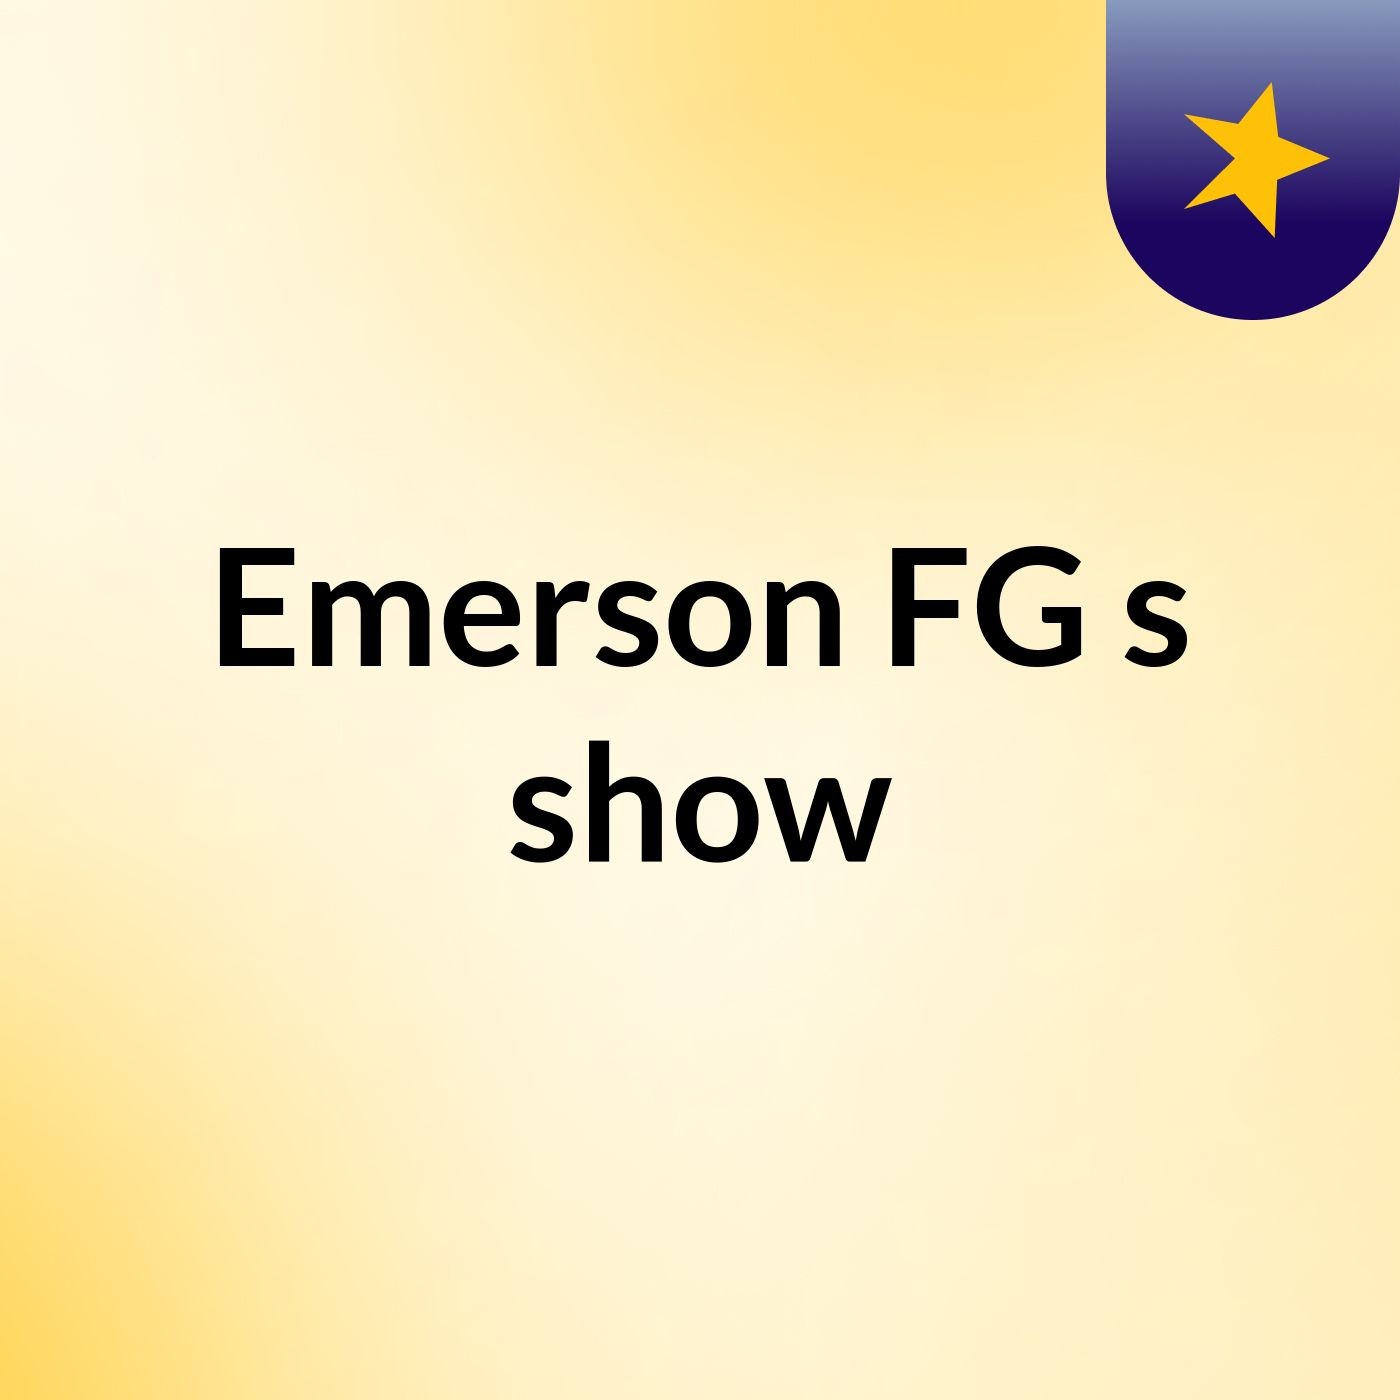 Emerson FG's show